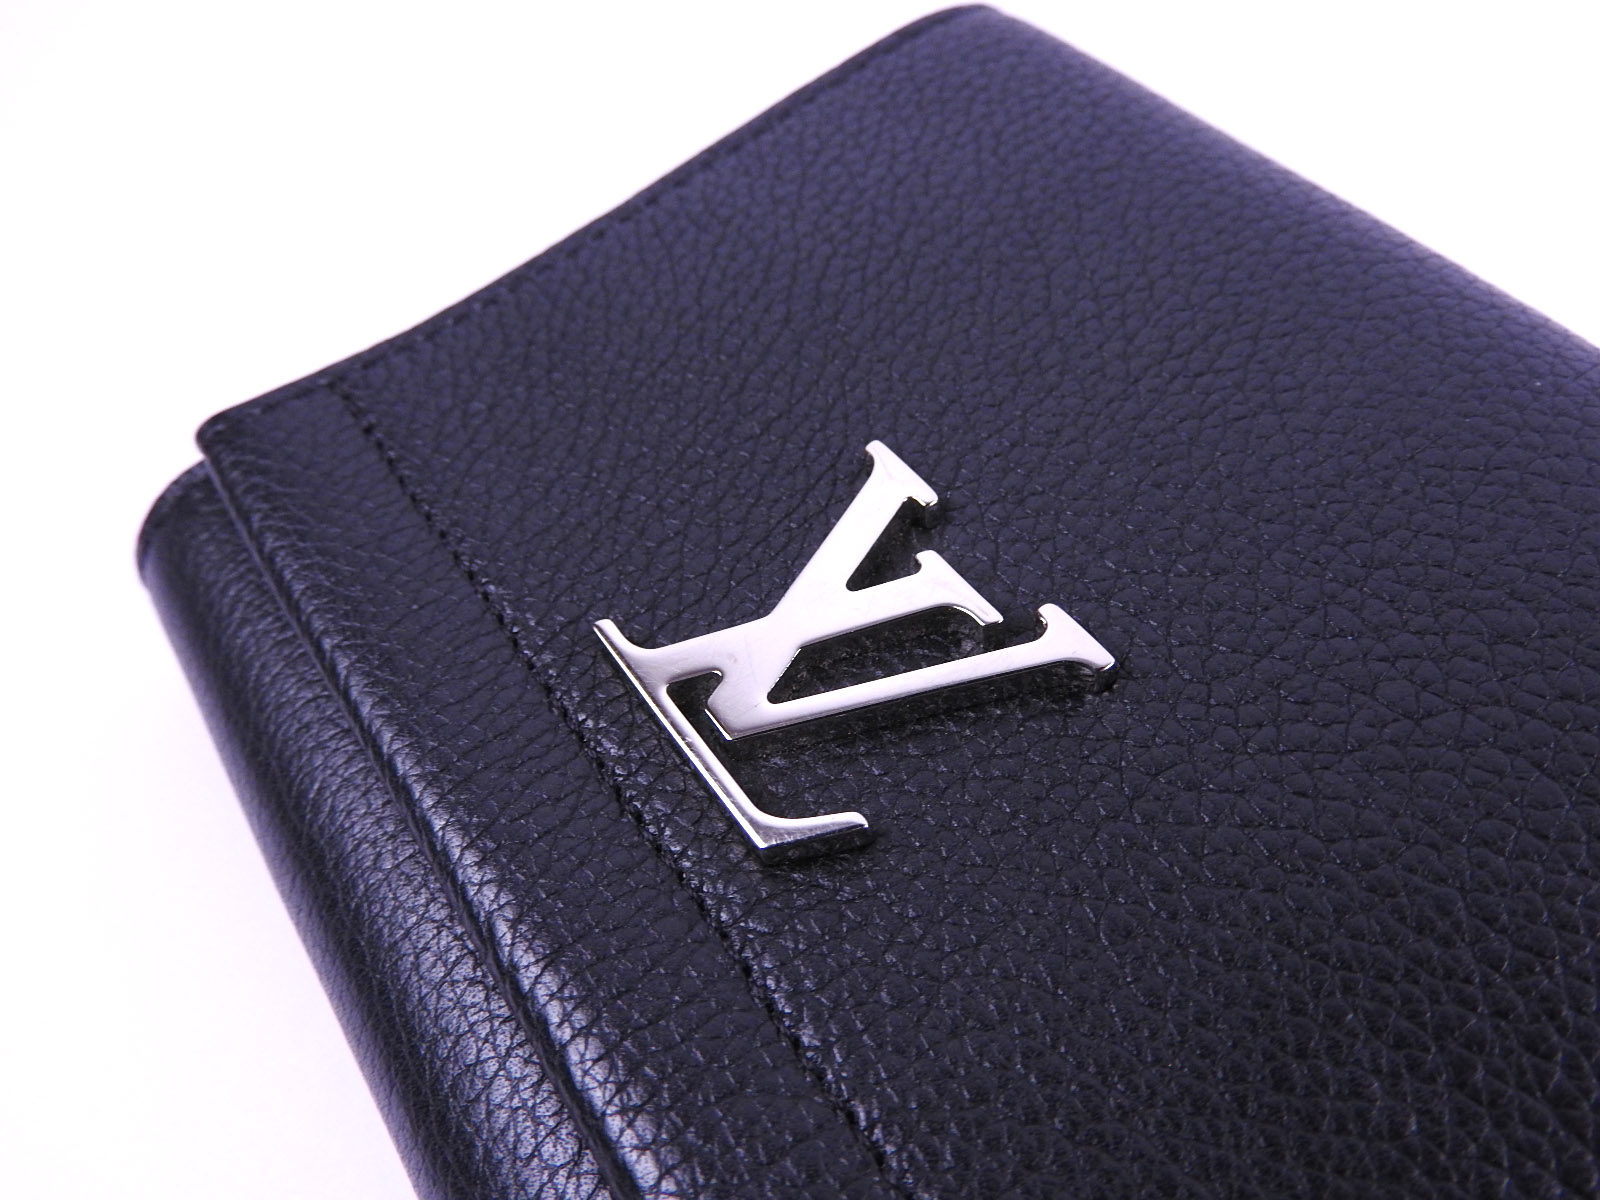 Louis Vuitton Lockme II Small Compact Wallet